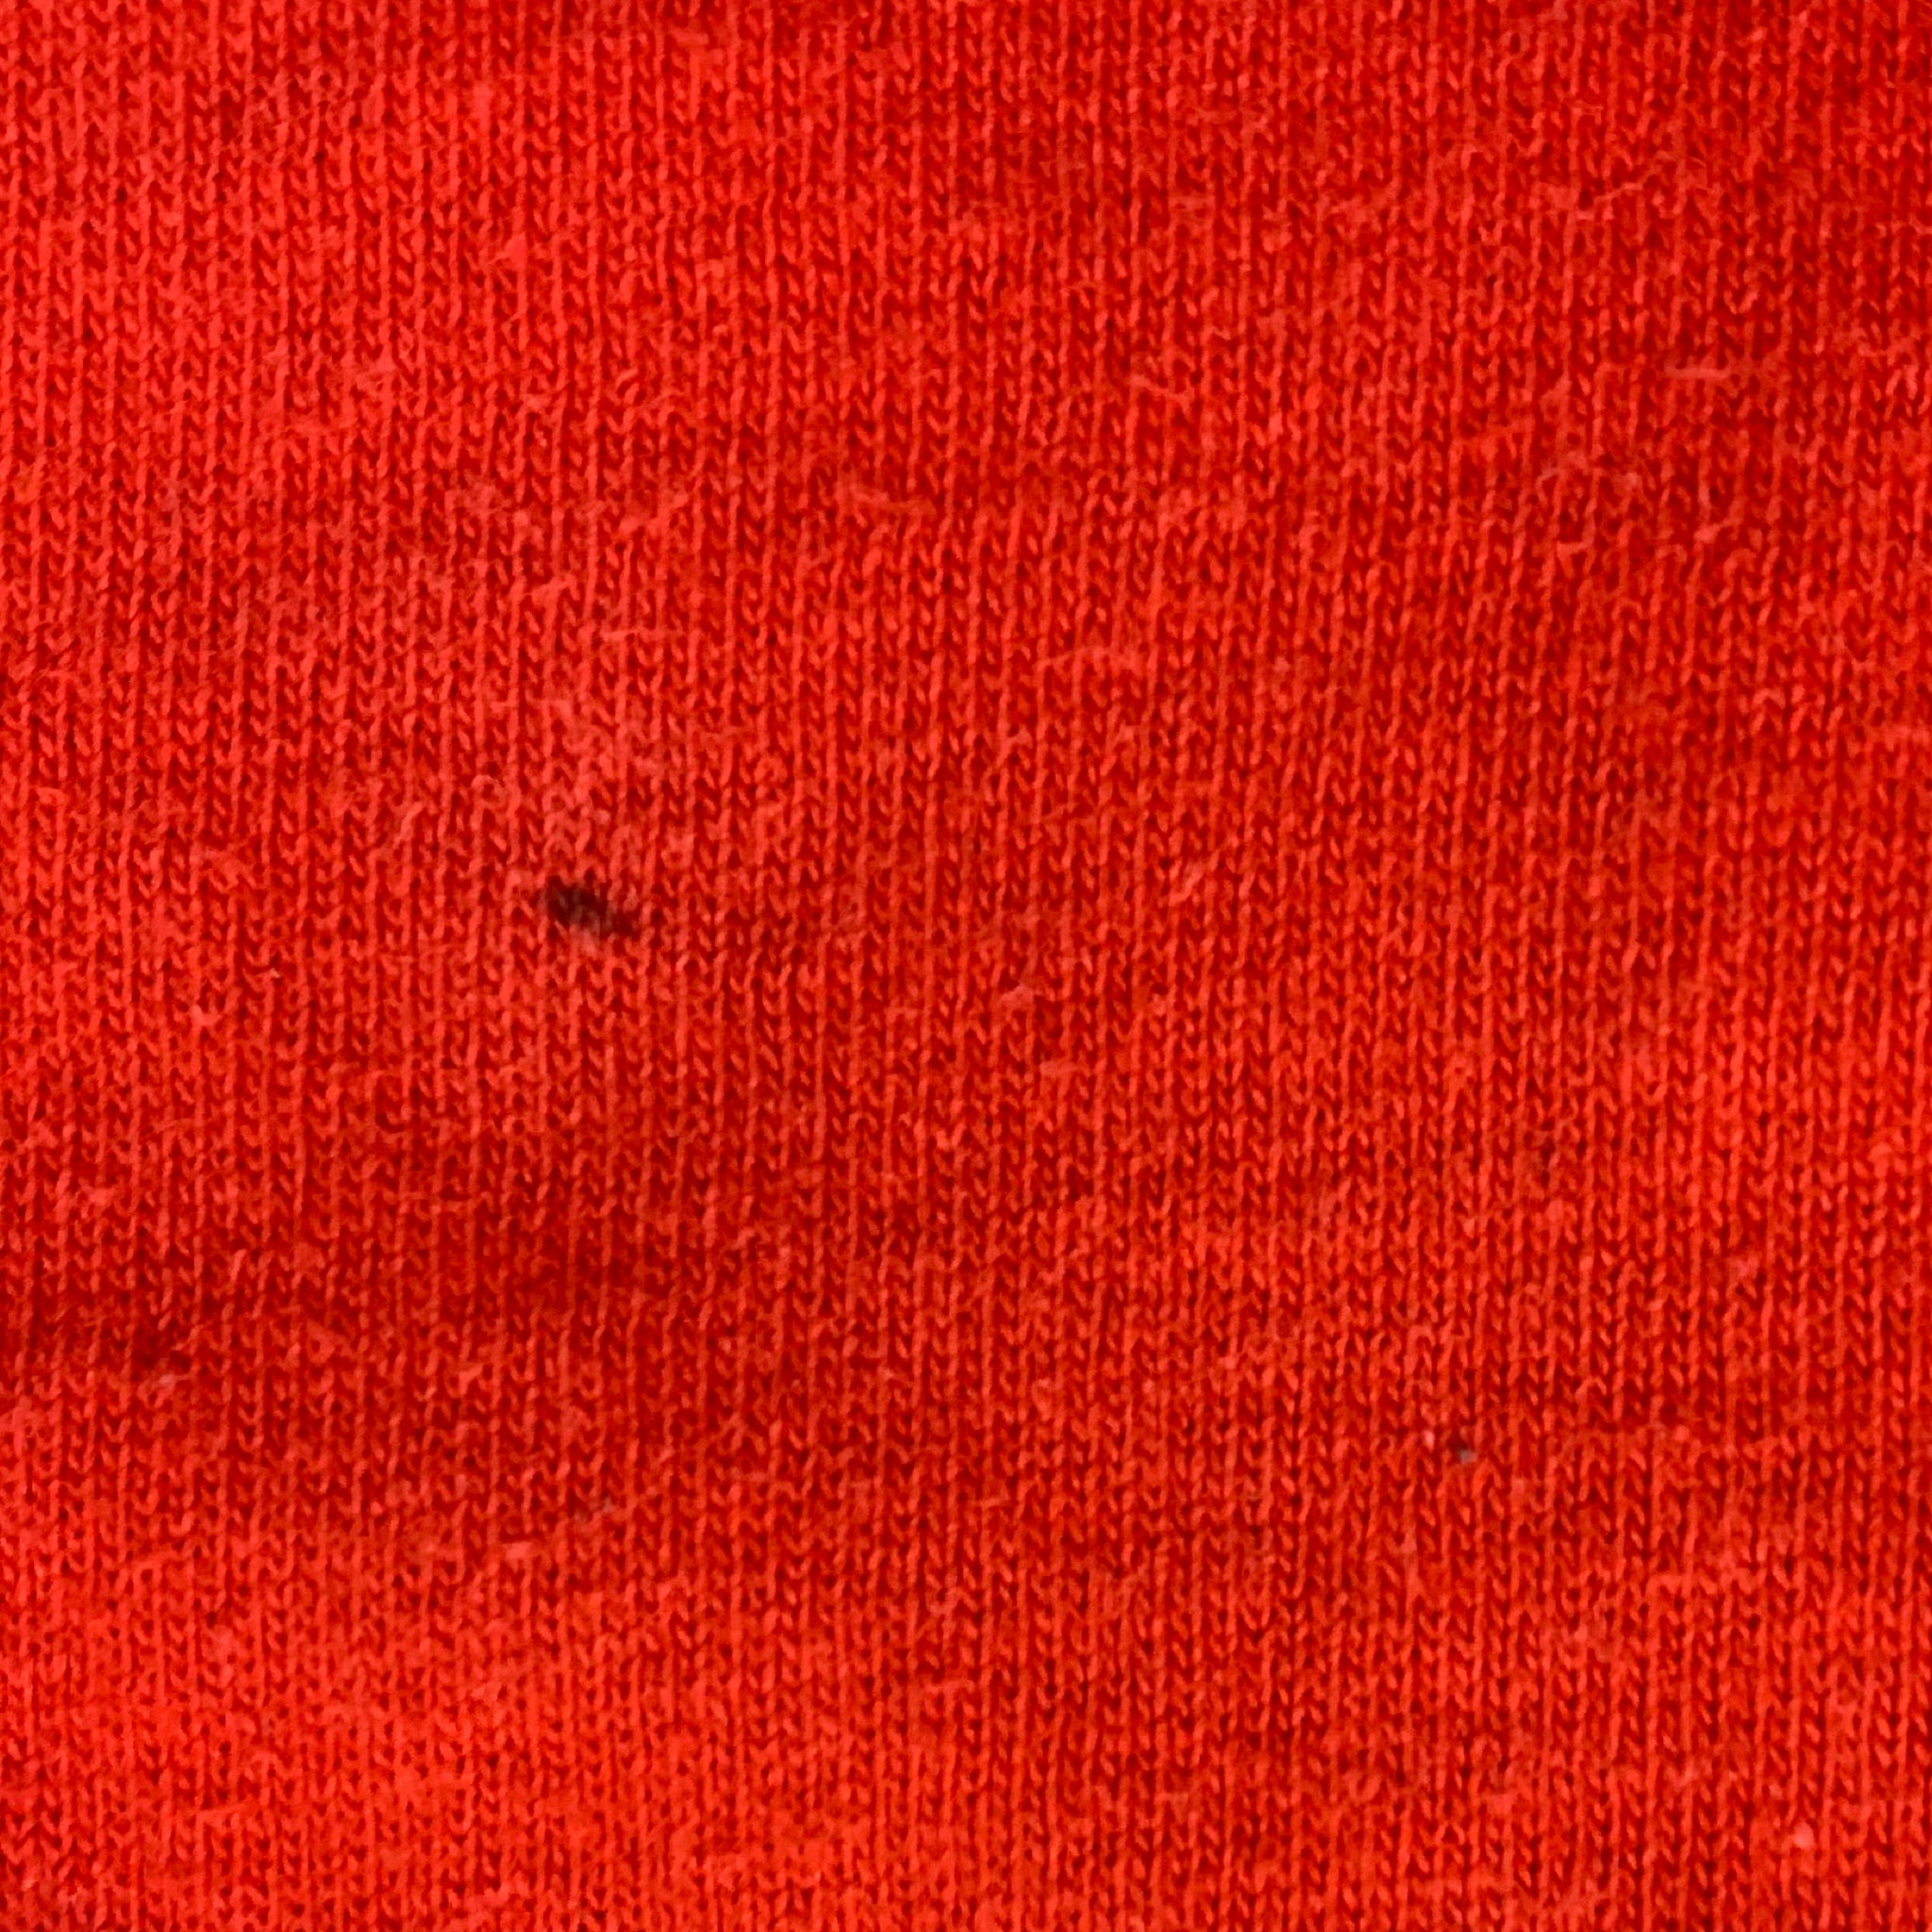 1994 Philadelphia Phillies Red Vintage Shirt